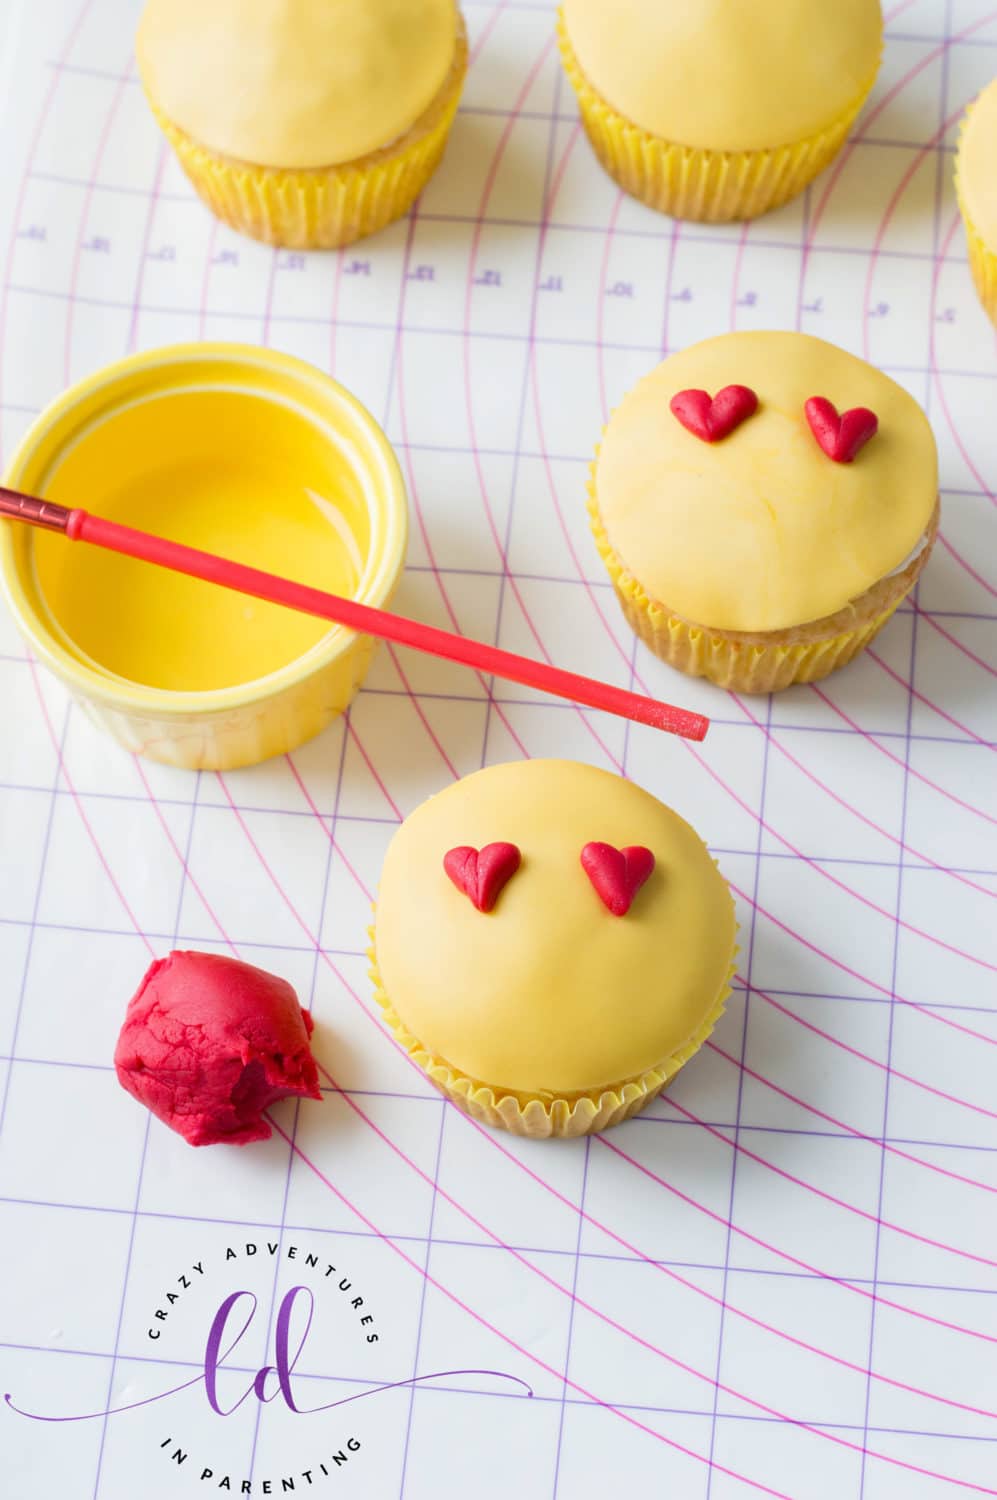 Place Fondant onto Heart Eyes Emoji Cupcakes